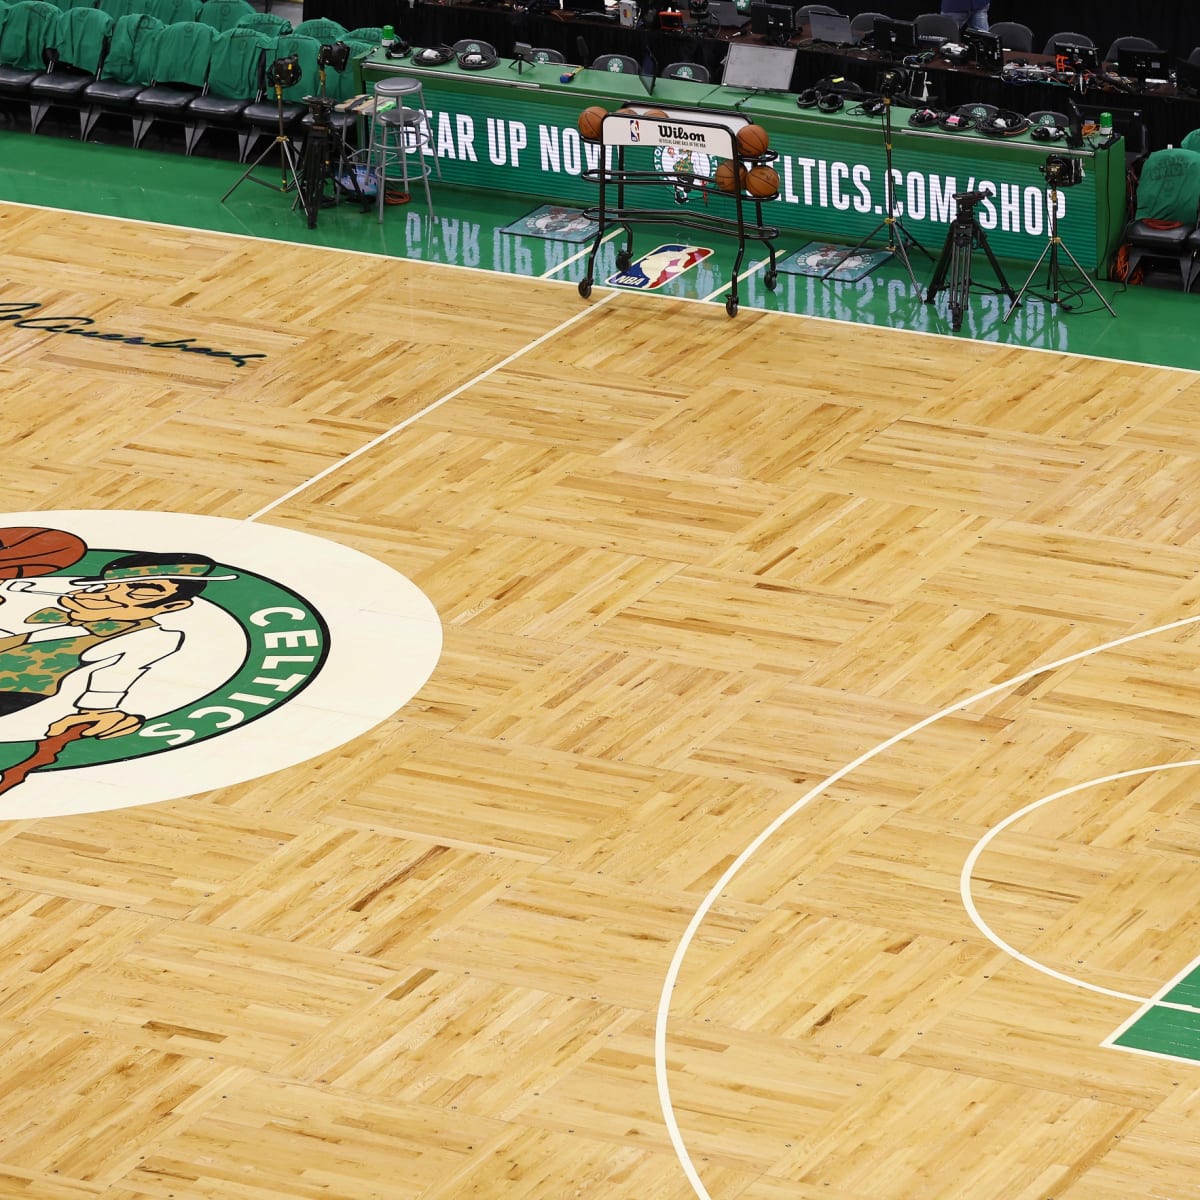 Celtics receive brutal injury update on Robert Williams for Game 4